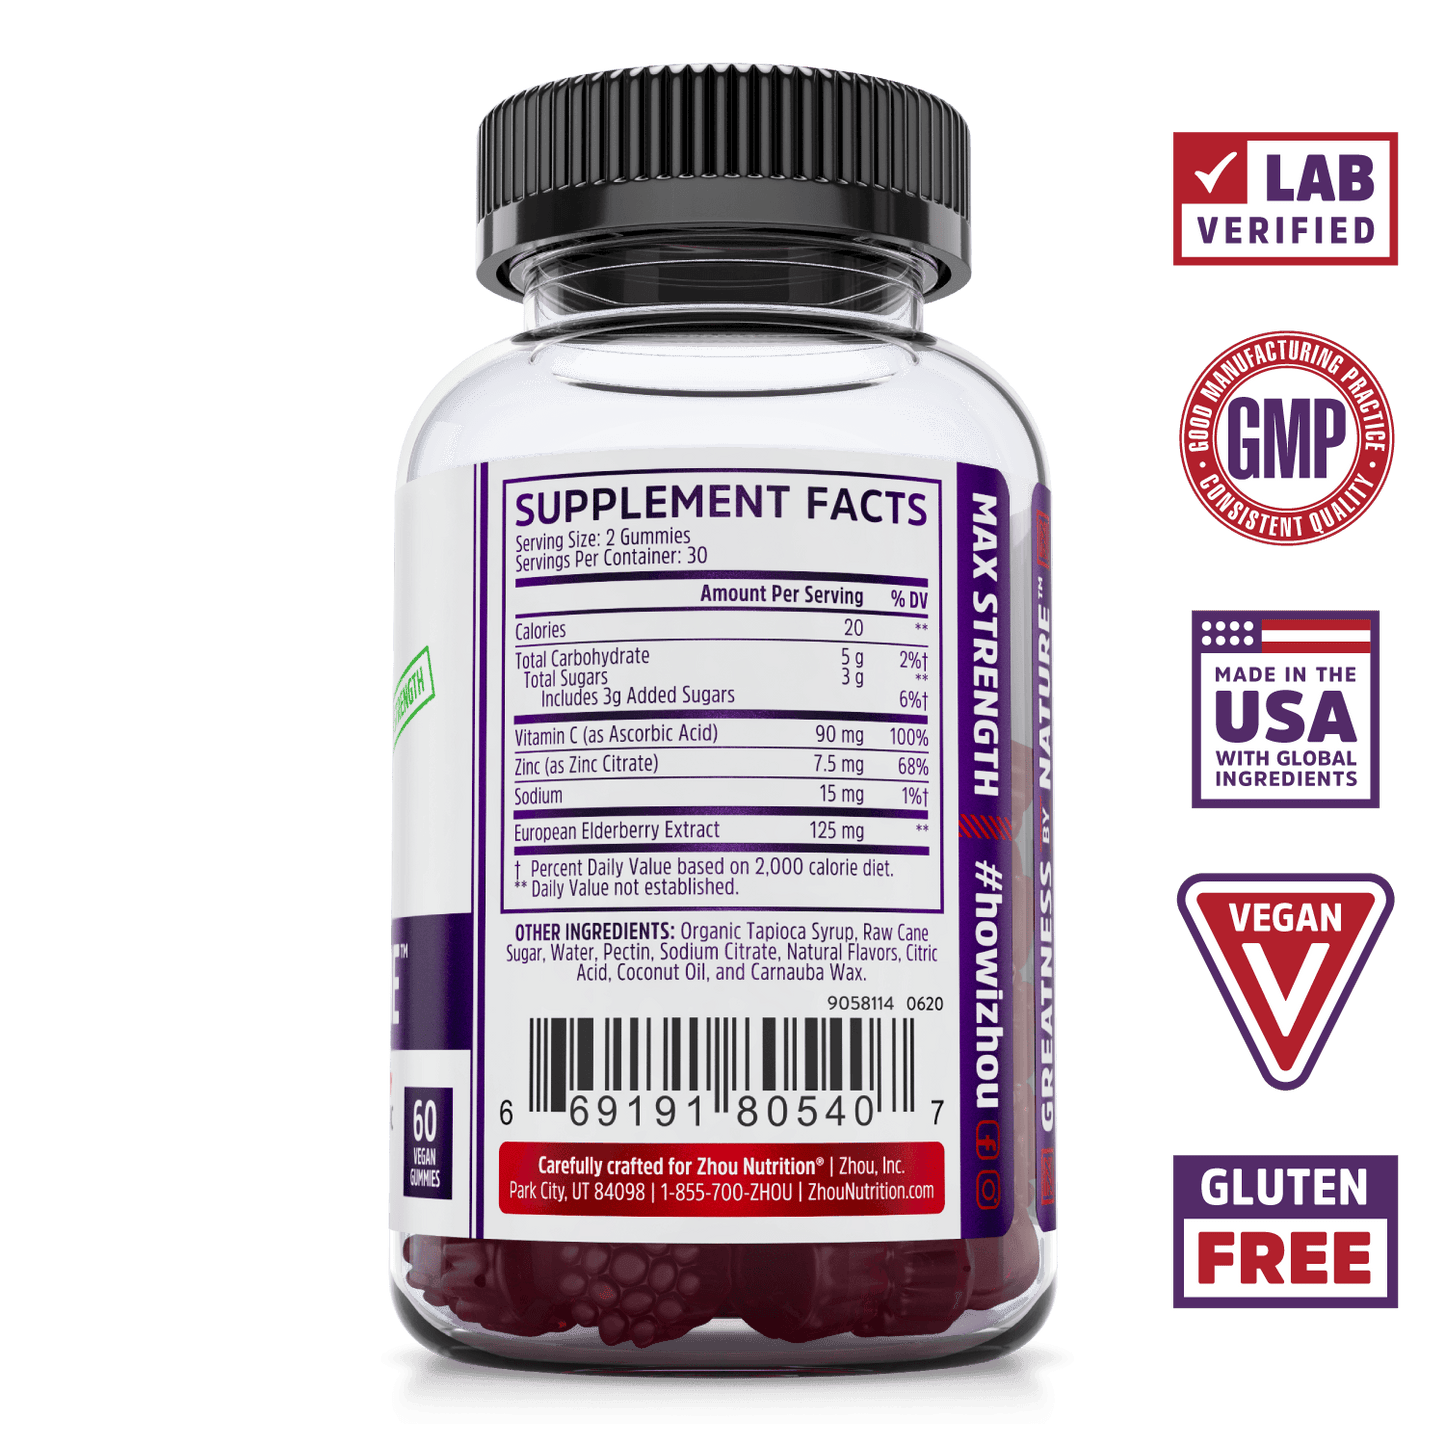 Elder-Mune Elderberry Supplement Gummies from Zhou Nutrition. Bottle side. Lab verified, good manufacturing practices, made in the USA with global ingredients, vegan, gluten free.